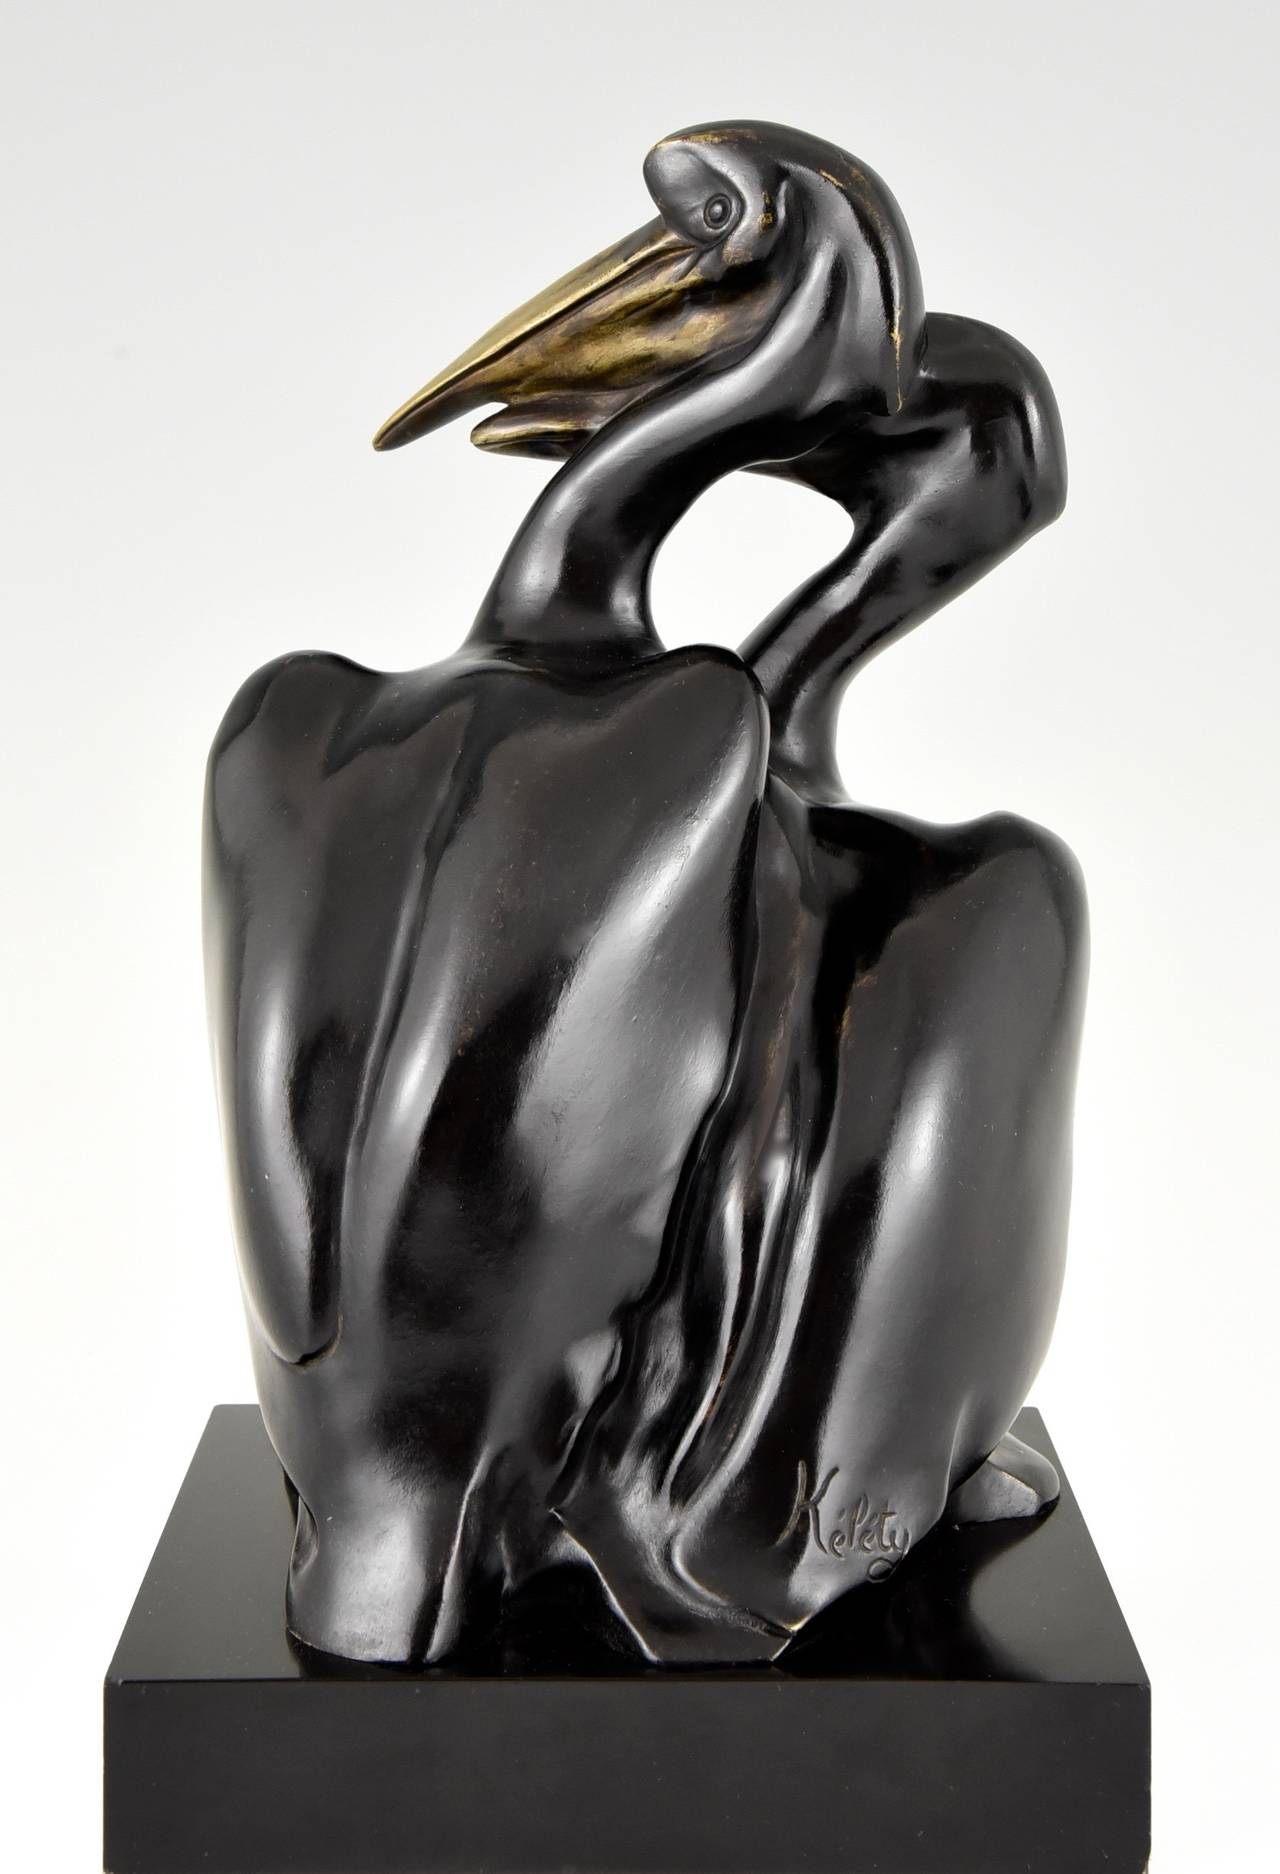 Belgian Black Marble French Art Deco Bronze Sculpture of Pelicans by Kelety, 1920 Original